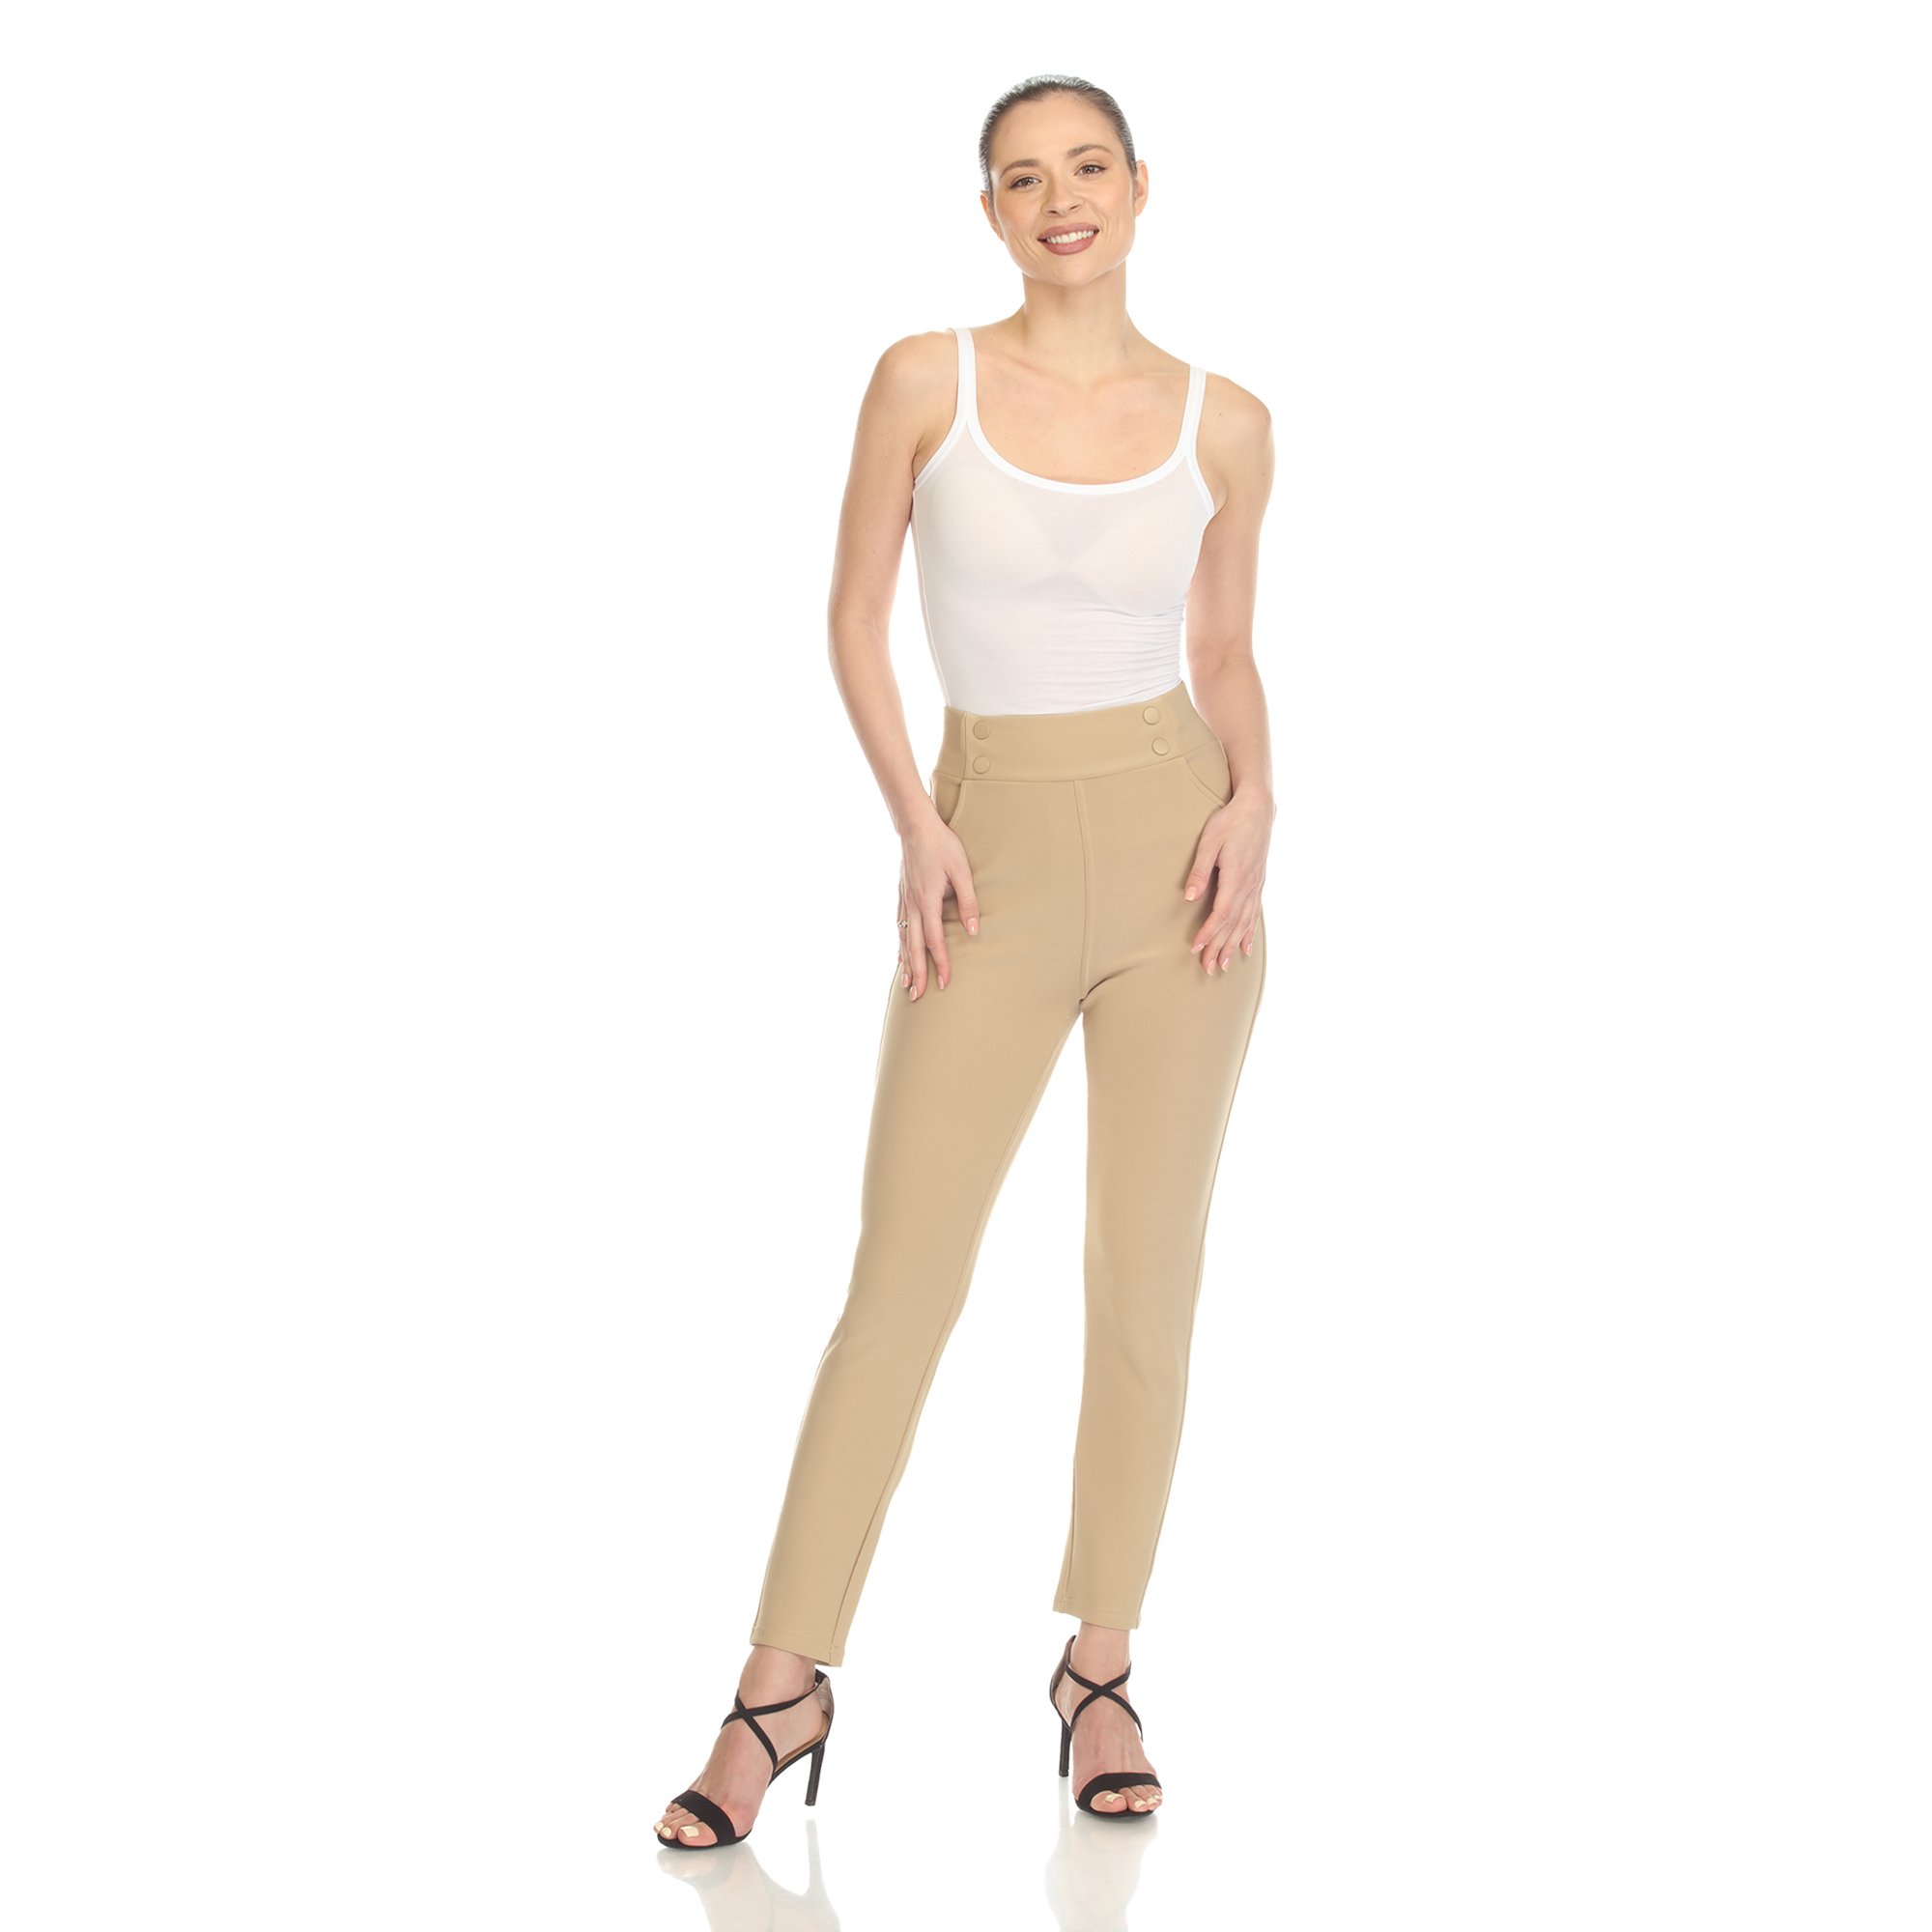 White Mark Women's Super Soft Elastic Waistband High Waist Scuba Pants With Pockets - Beige, Large